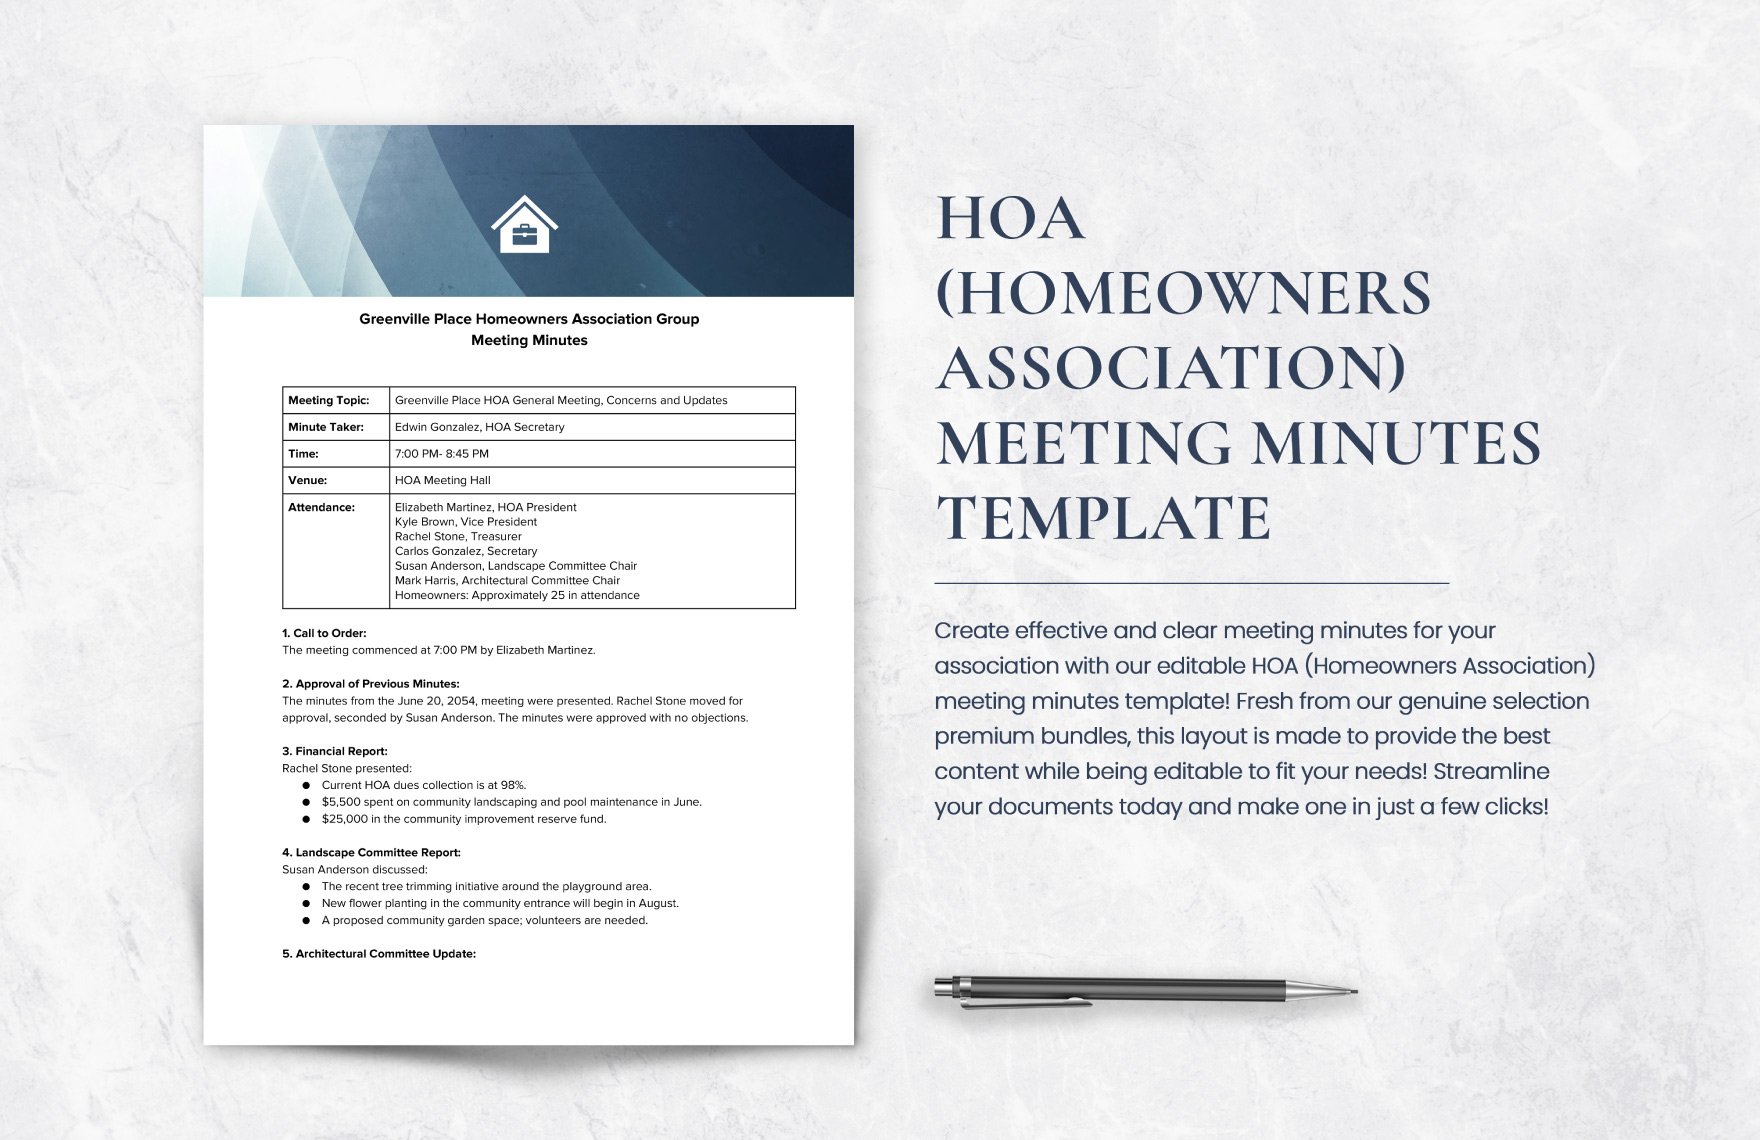 HOA (Homeowners Association) Meeting Minutes Template